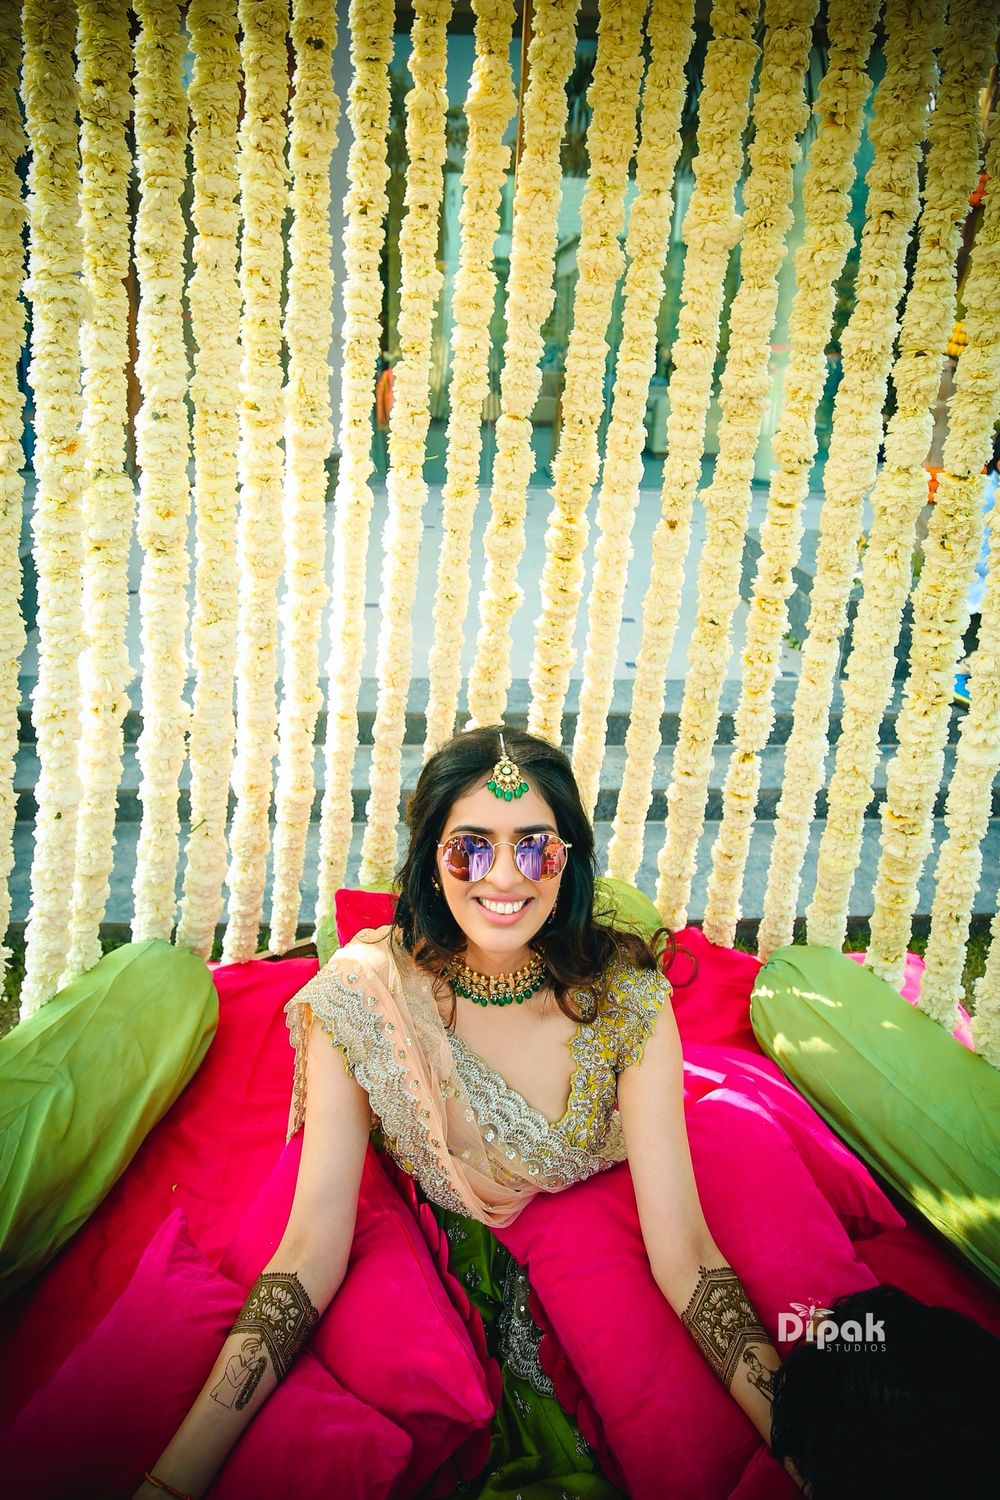 Photo of Bride mehendi with photobooth and sunglasses shot